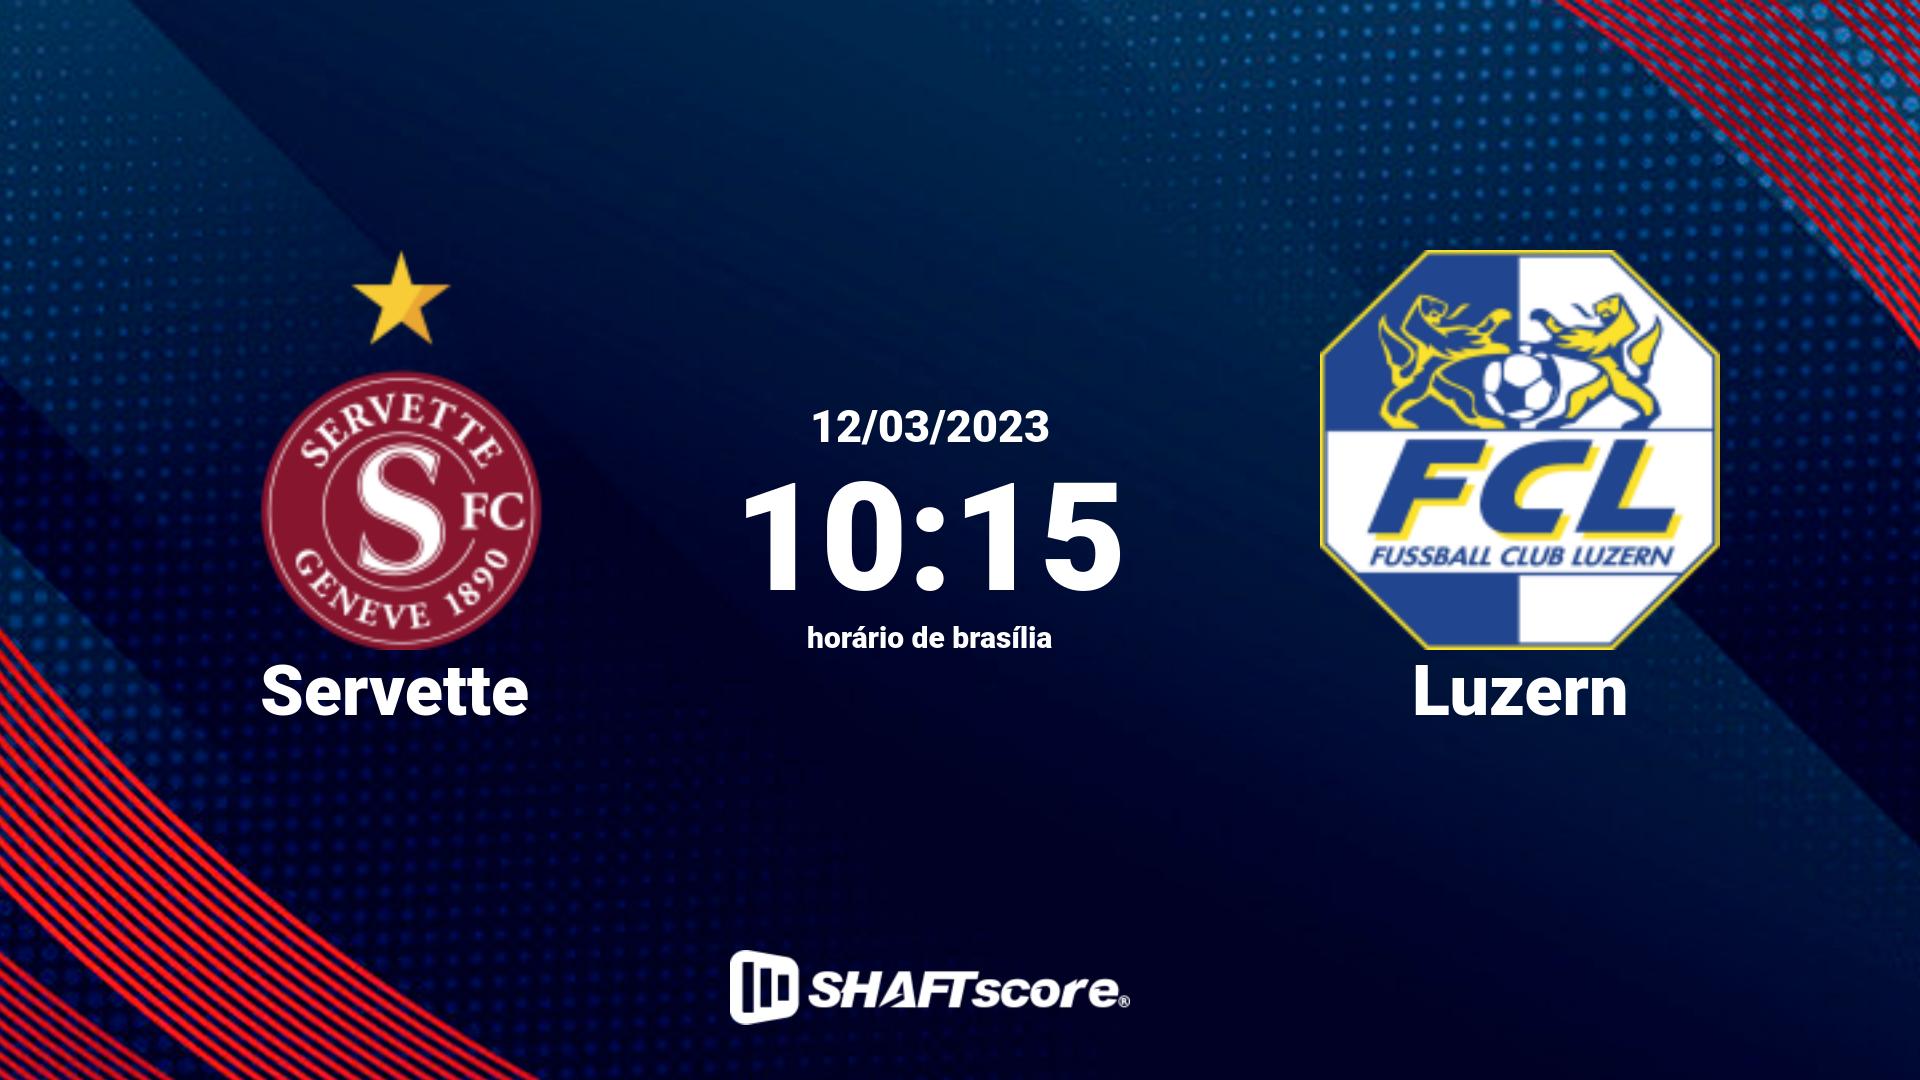 Estatísticas do jogo Servette vs Luzern 12.03 10:15